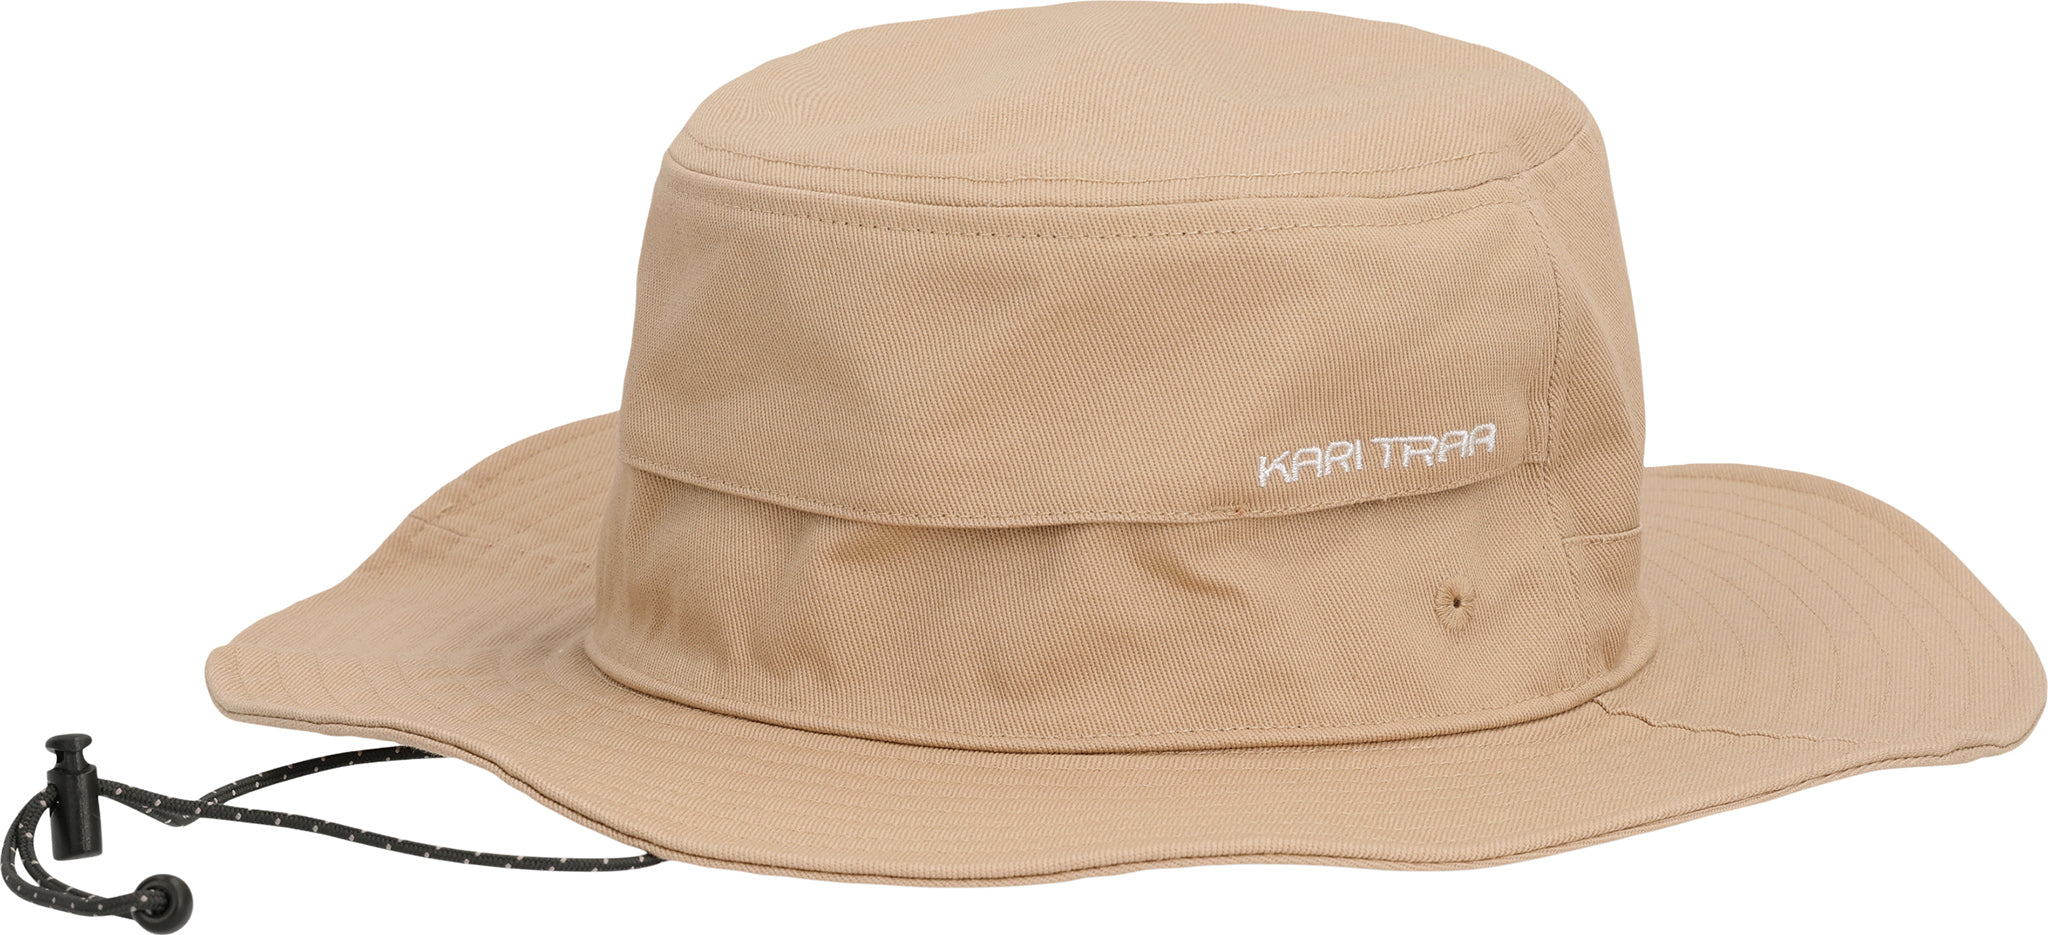 Kari Traa Hiking Hat - Women's OS Oat